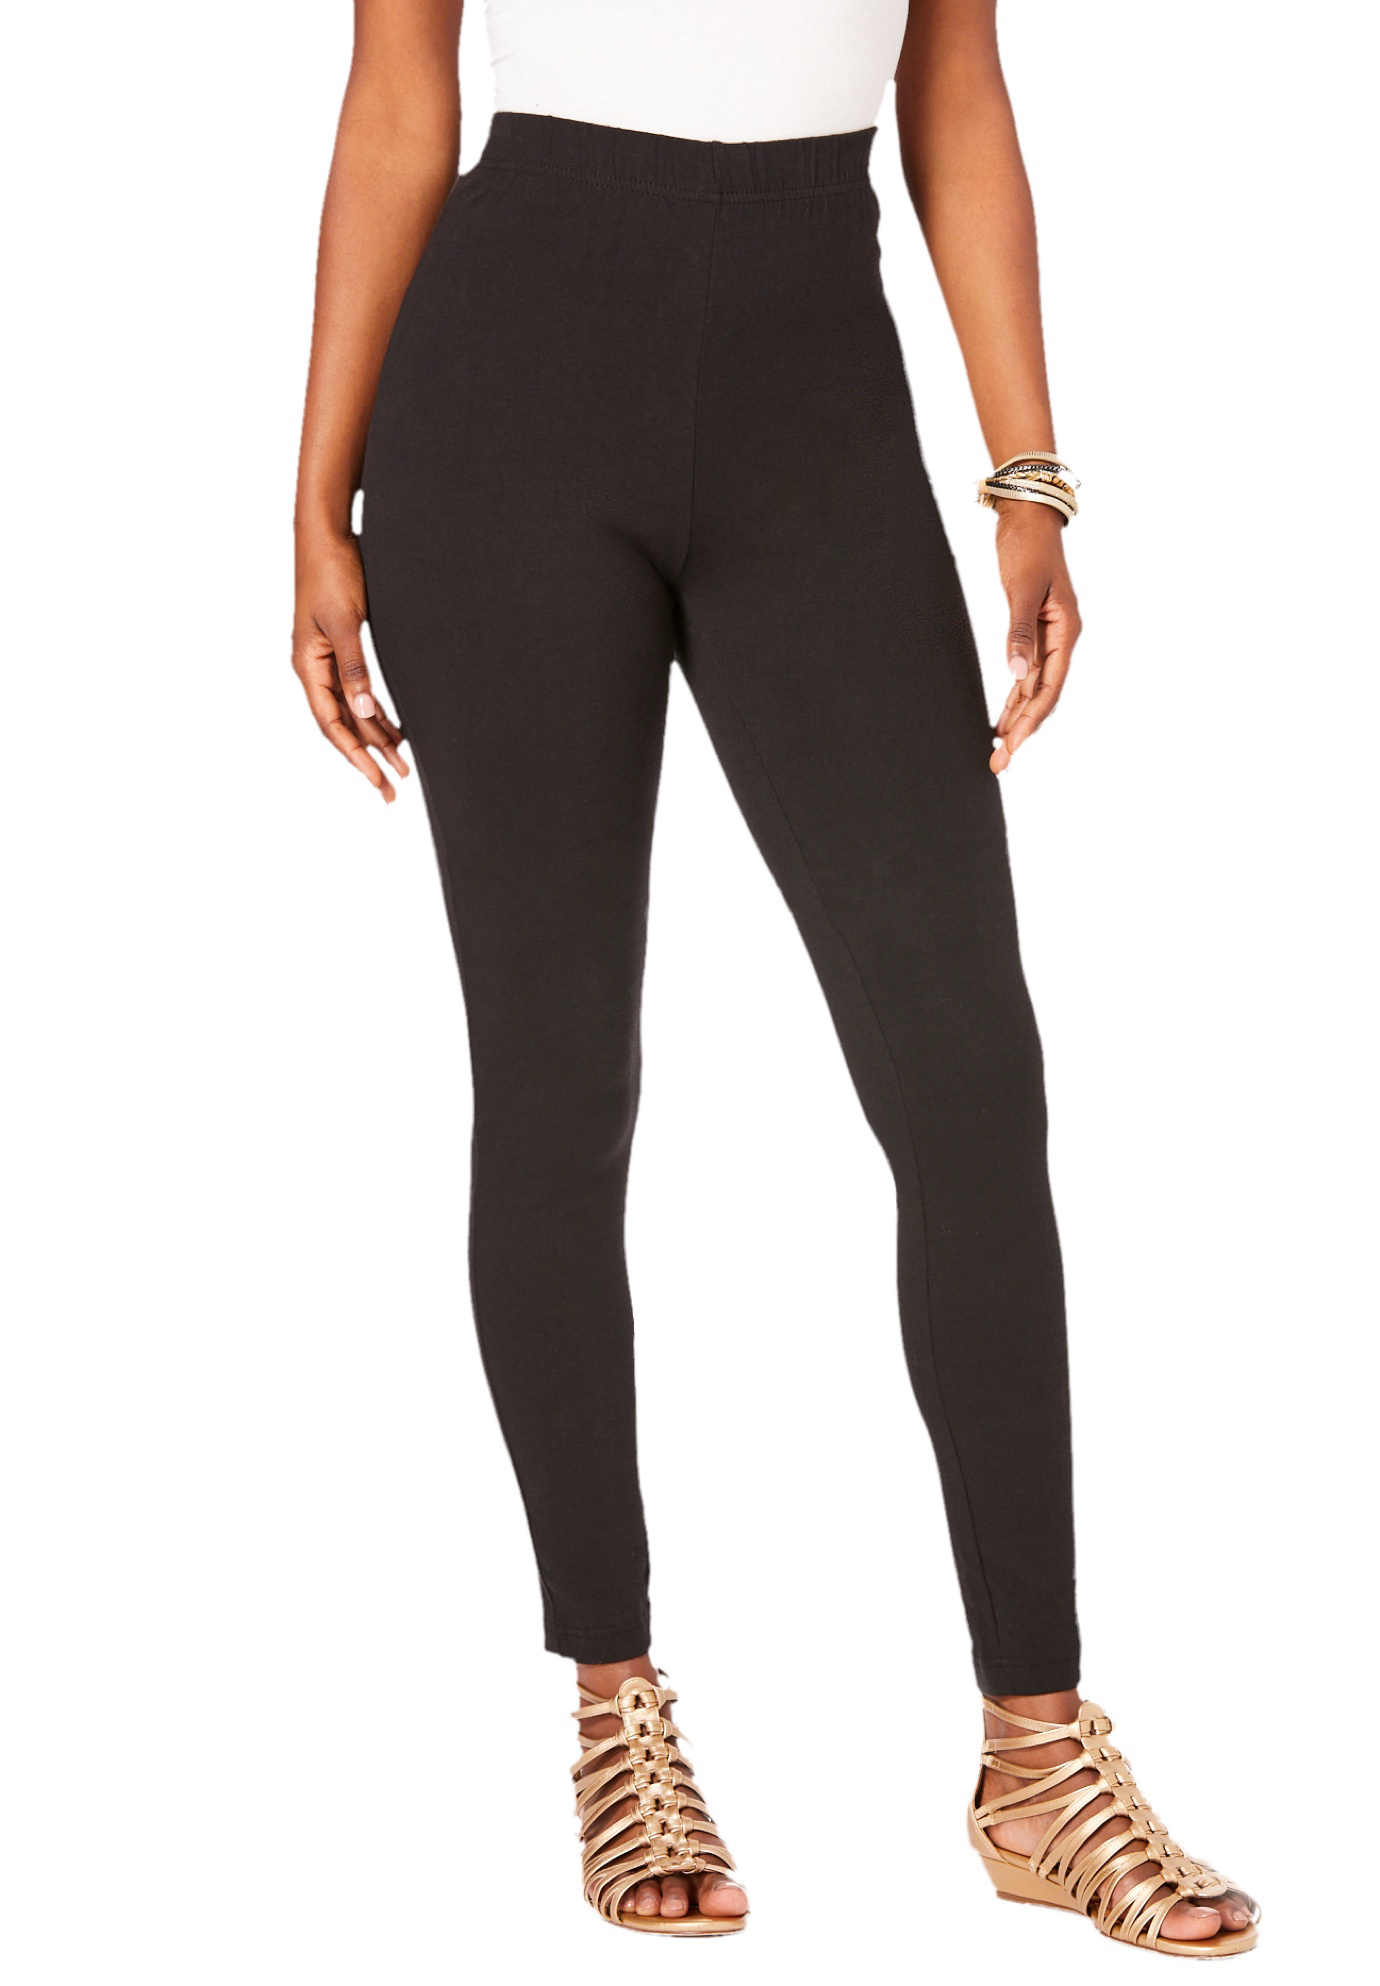 Roaman's Women's Plus Size Petite Ankle-Length Essential Stretch Legging Activewear Workout Yoga Pants - image 1 of 6